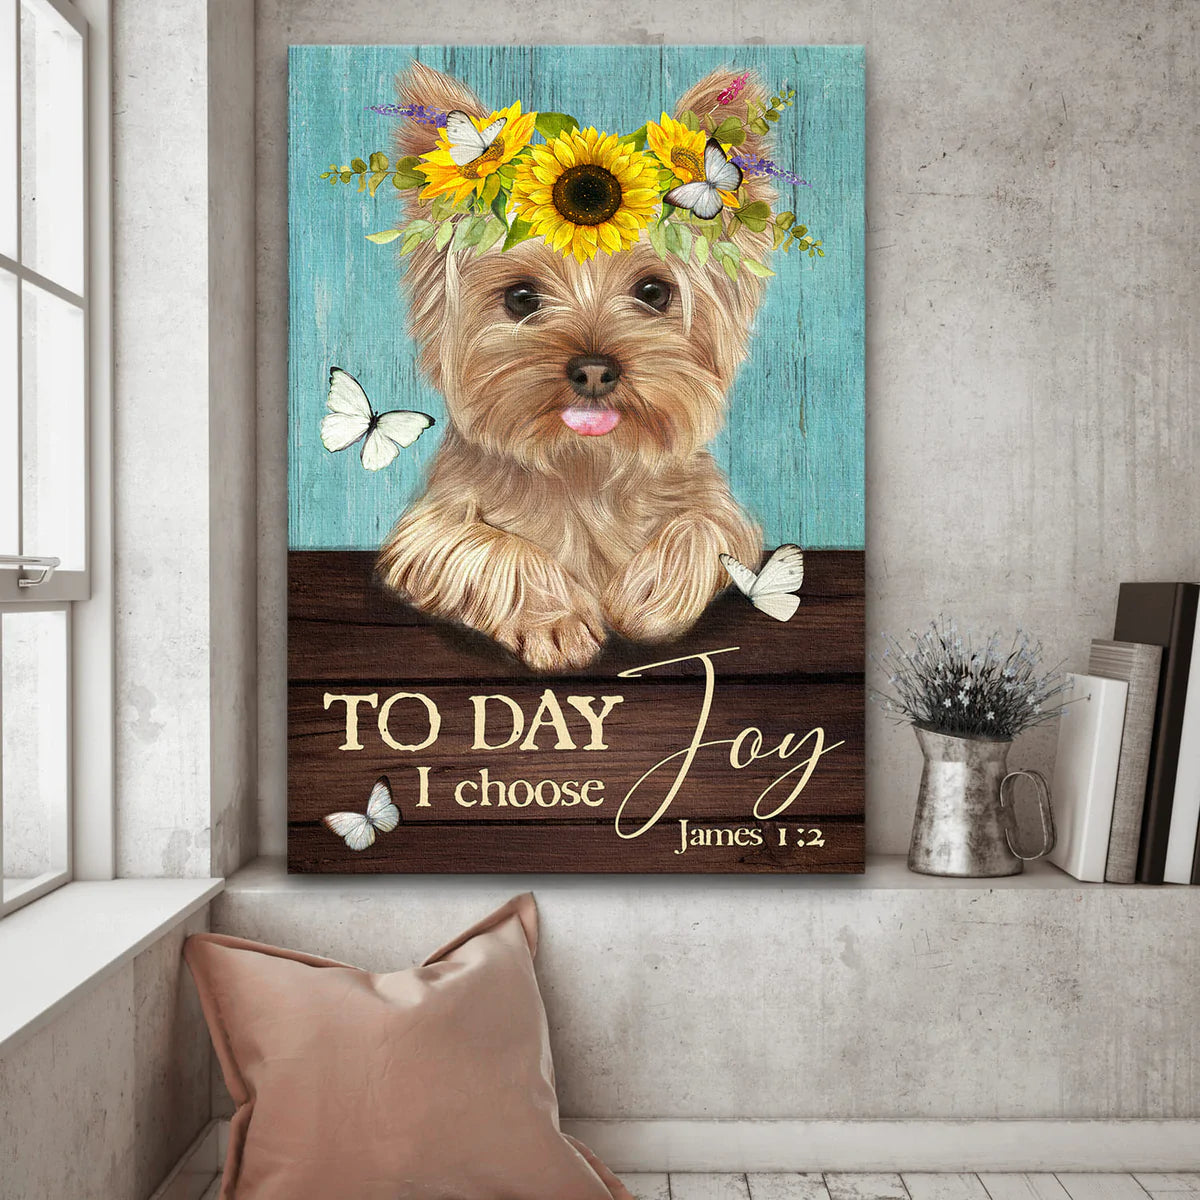 Yorkshire Terrier Dog Portrait Canvas - Yorkshire Terrier, Flower Wreath, Jesus Canvas - Gift for Yorkshire Terrier, Dog Lovers, Christian - Today I Choose Joy